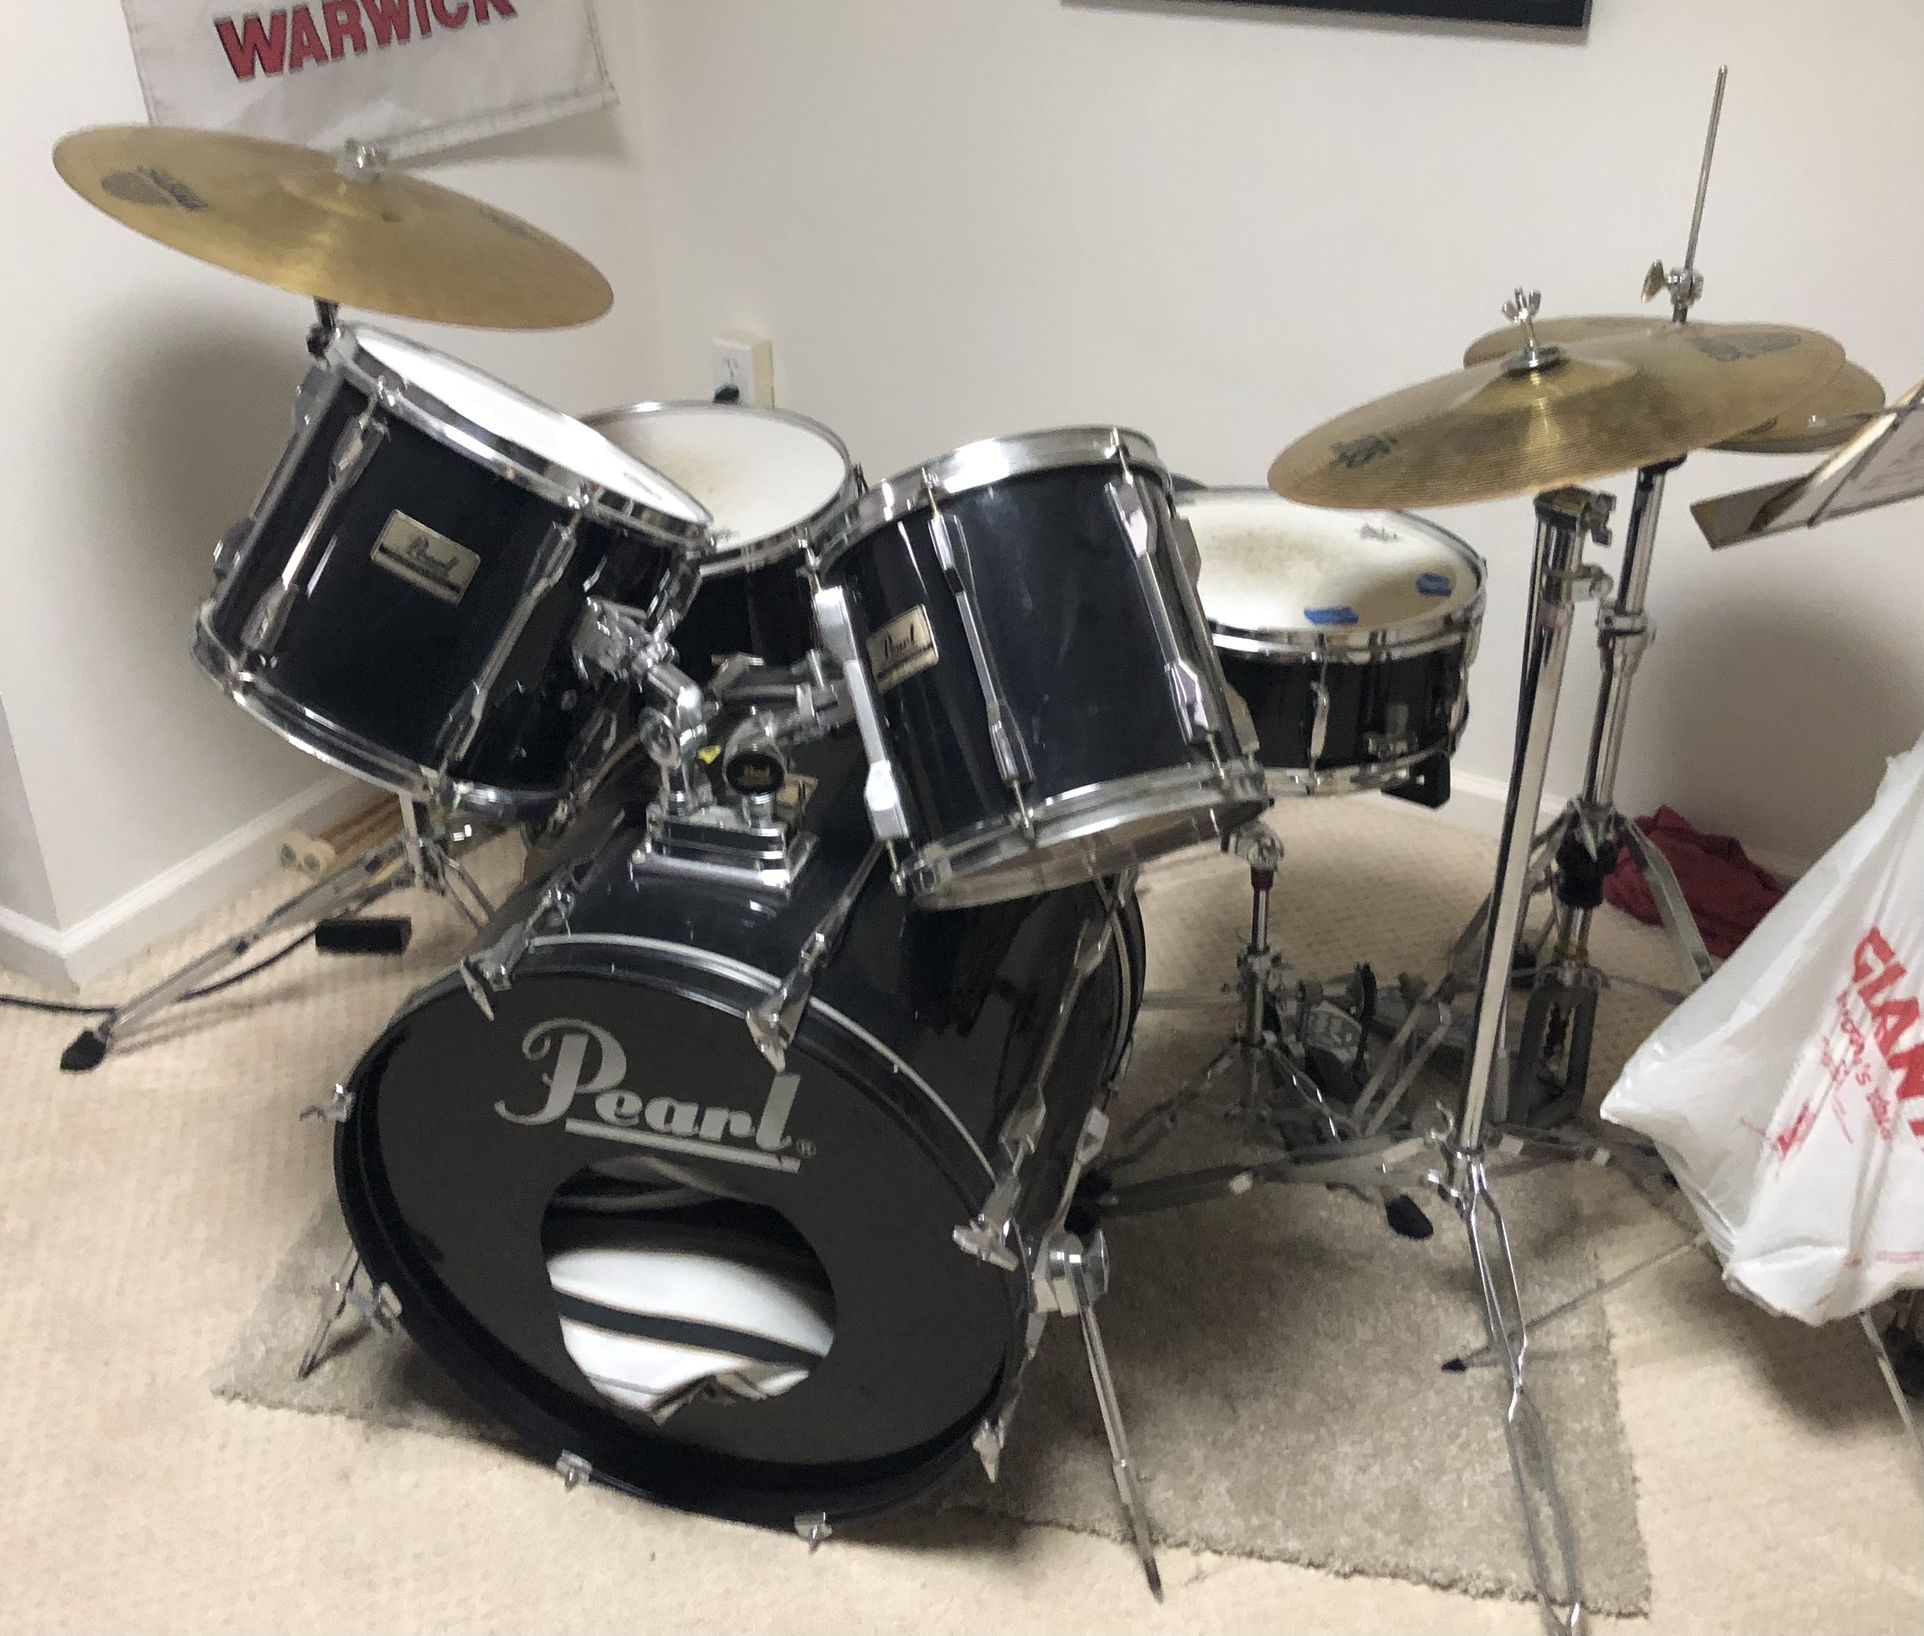 Pearl Export Series Drum Set- 8piece 